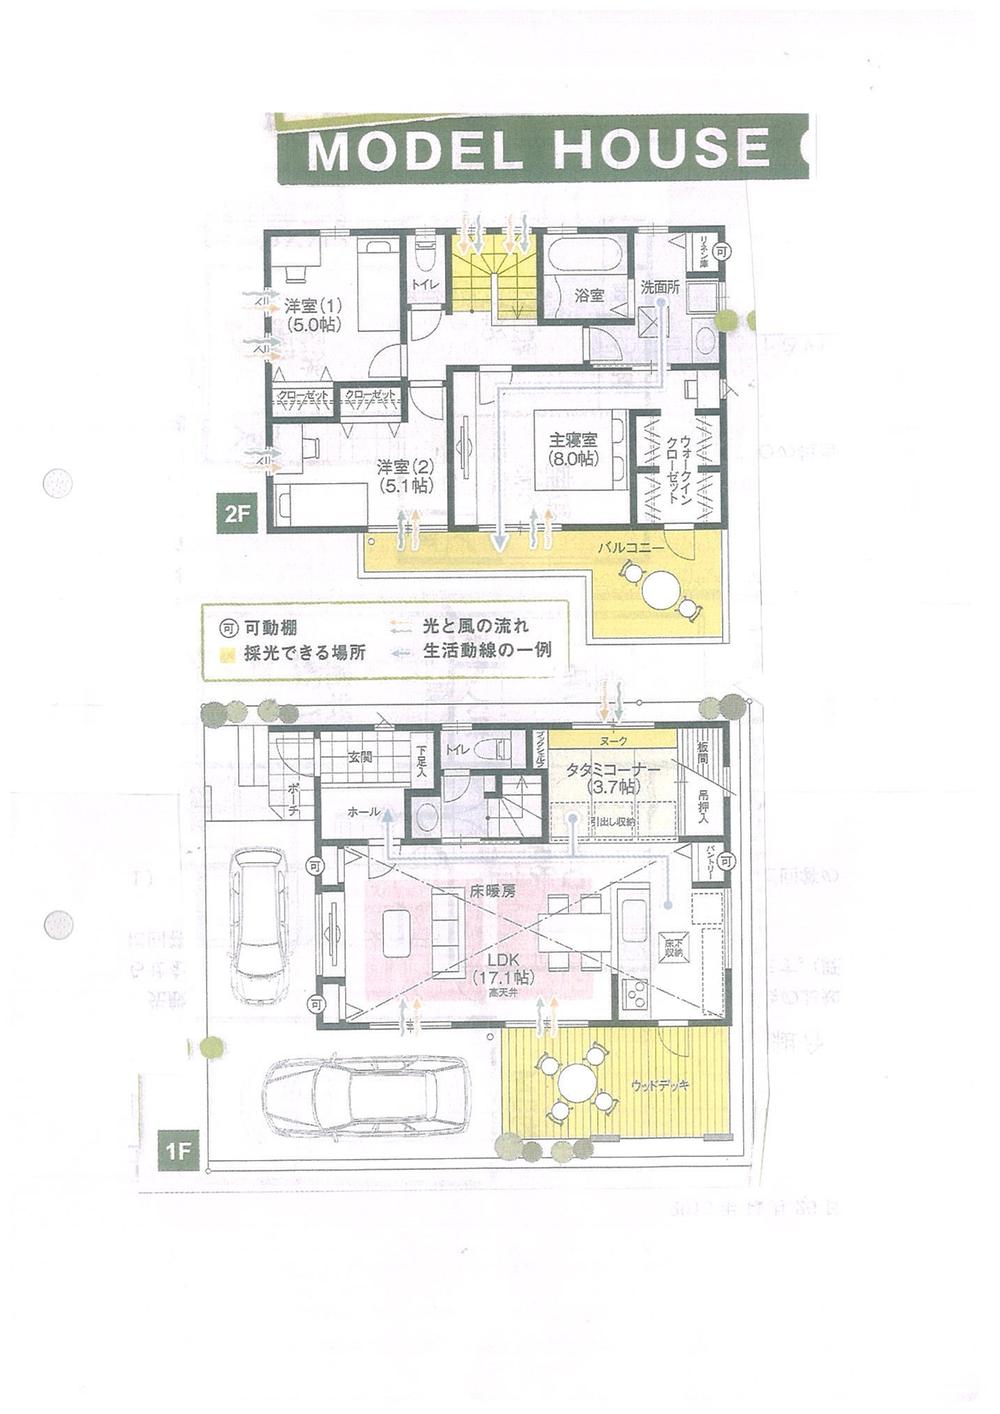 Compartment figure. Land price 1.4 million yen, Land area 154.03 sq m